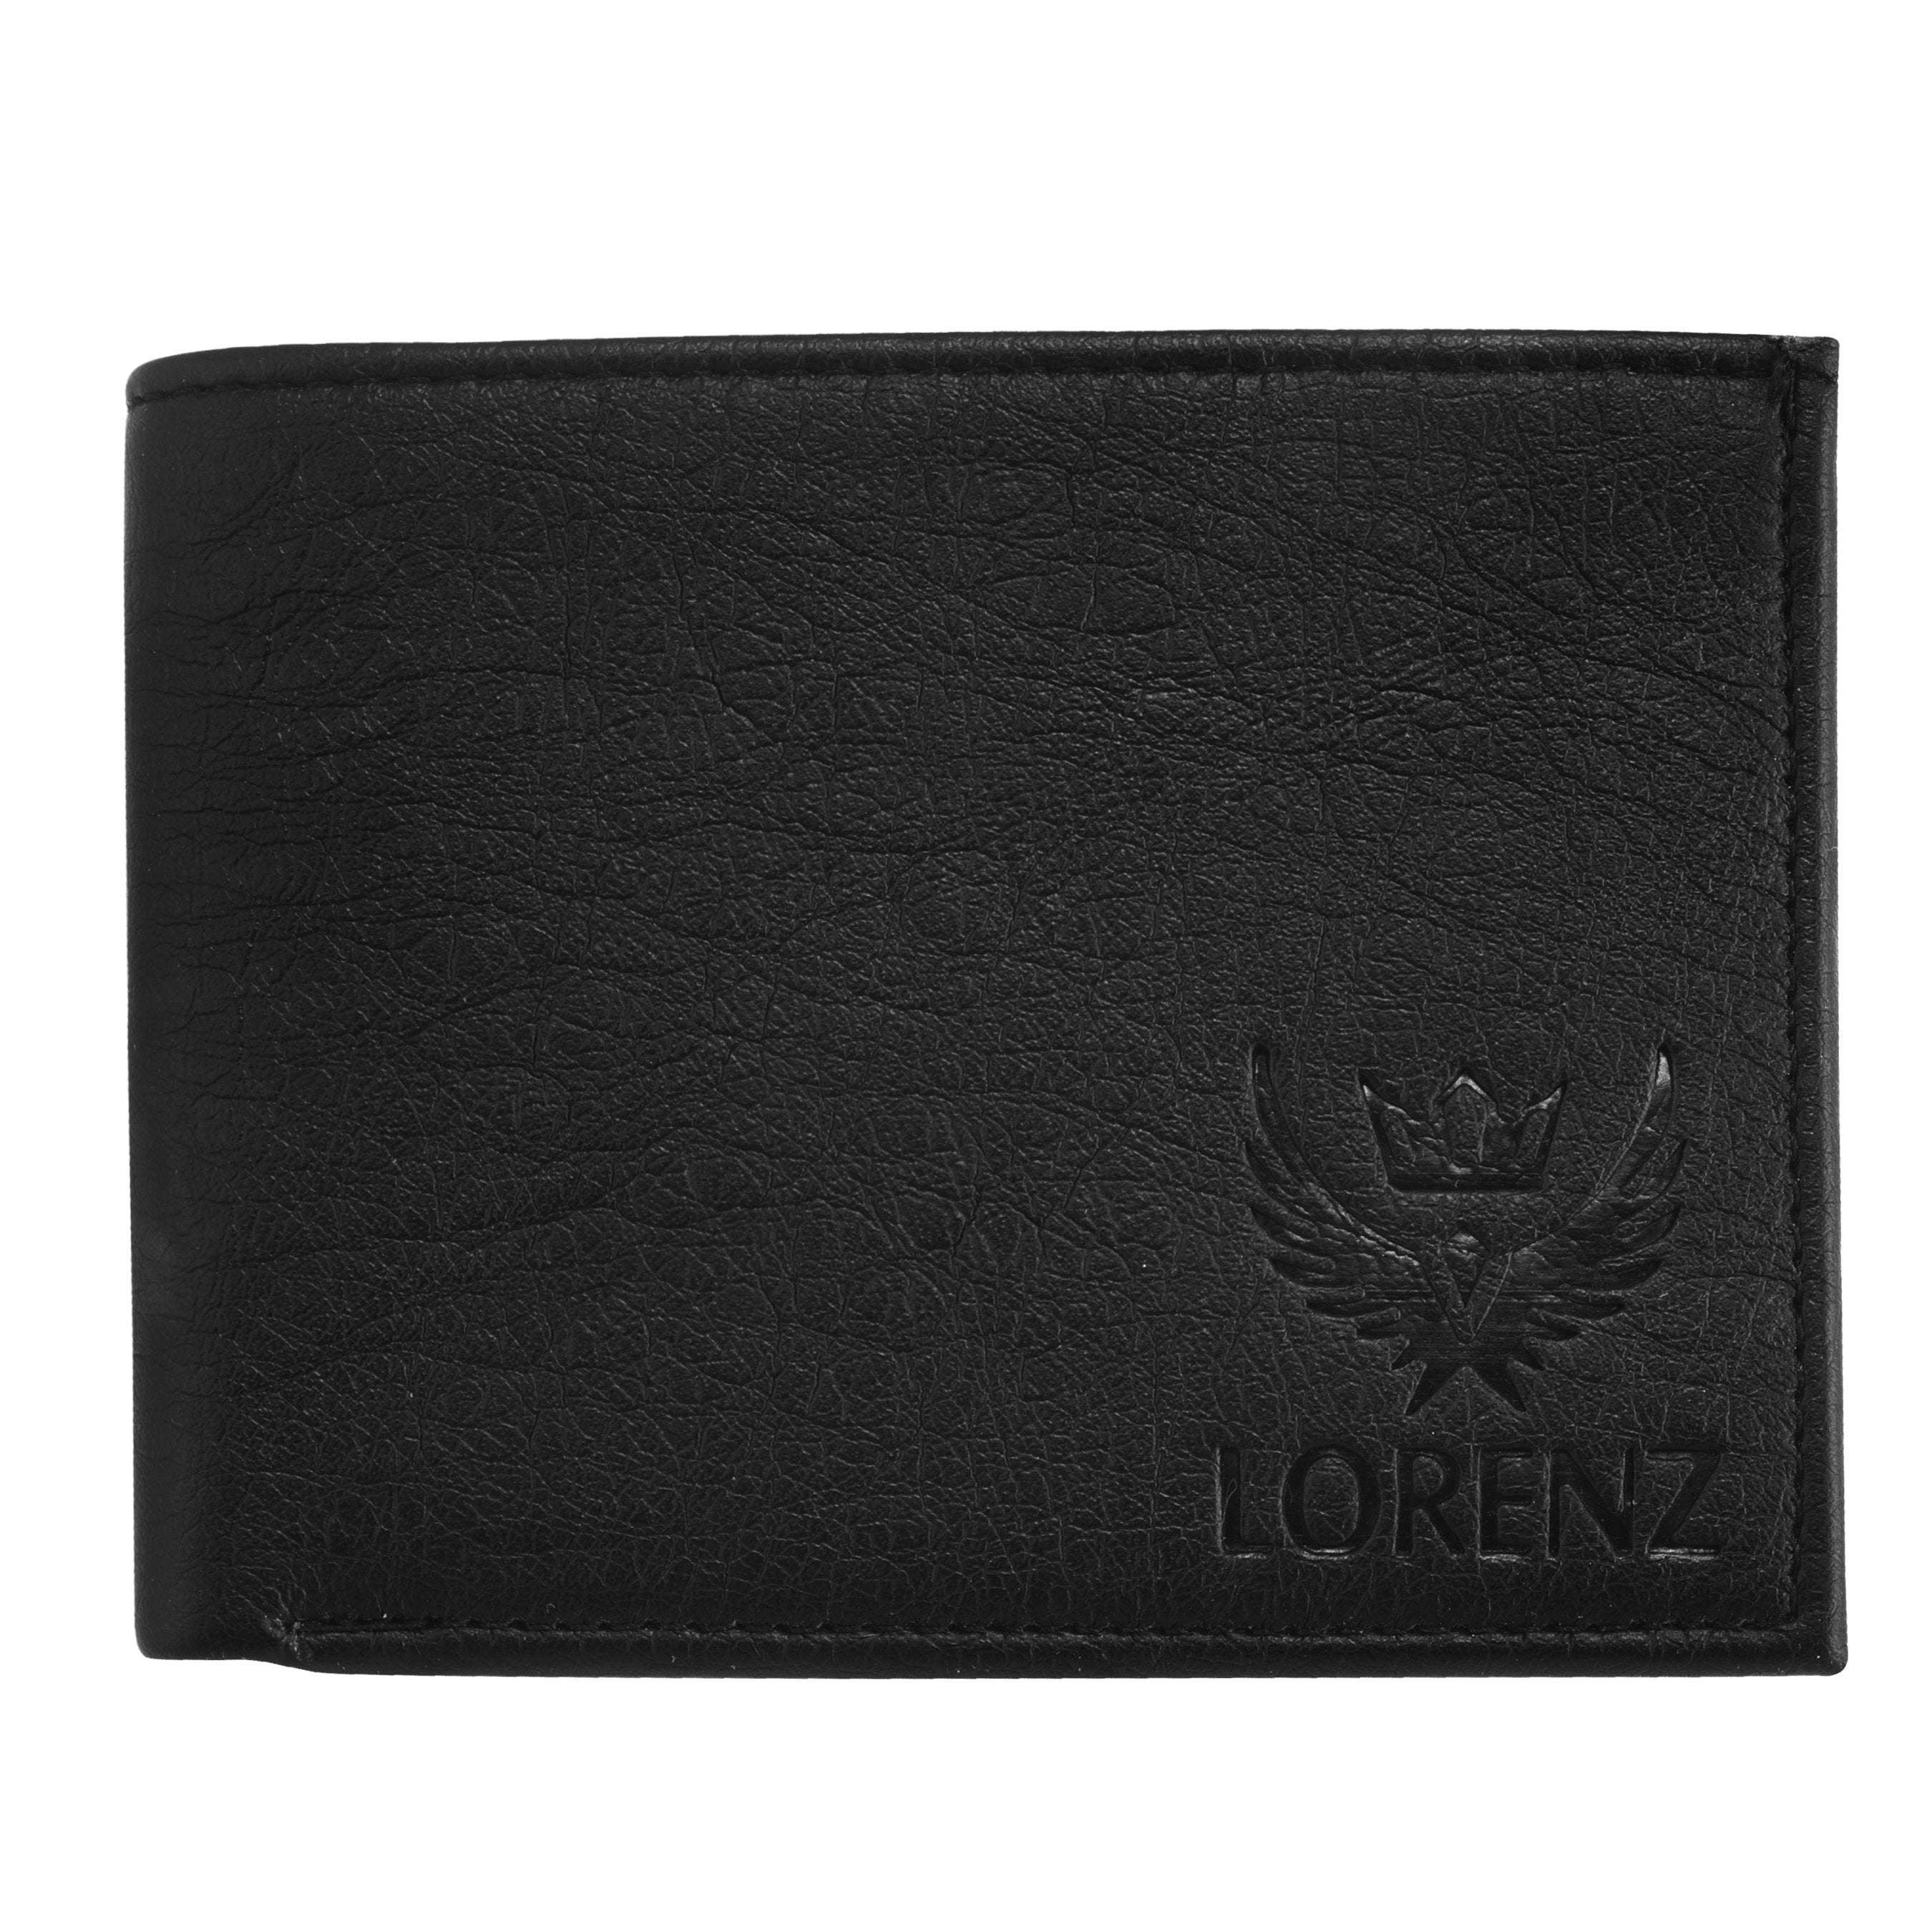 Lorenz Combo of Black Sunglasses, Men's Watch & Black Wallet - Lorenz Fashion